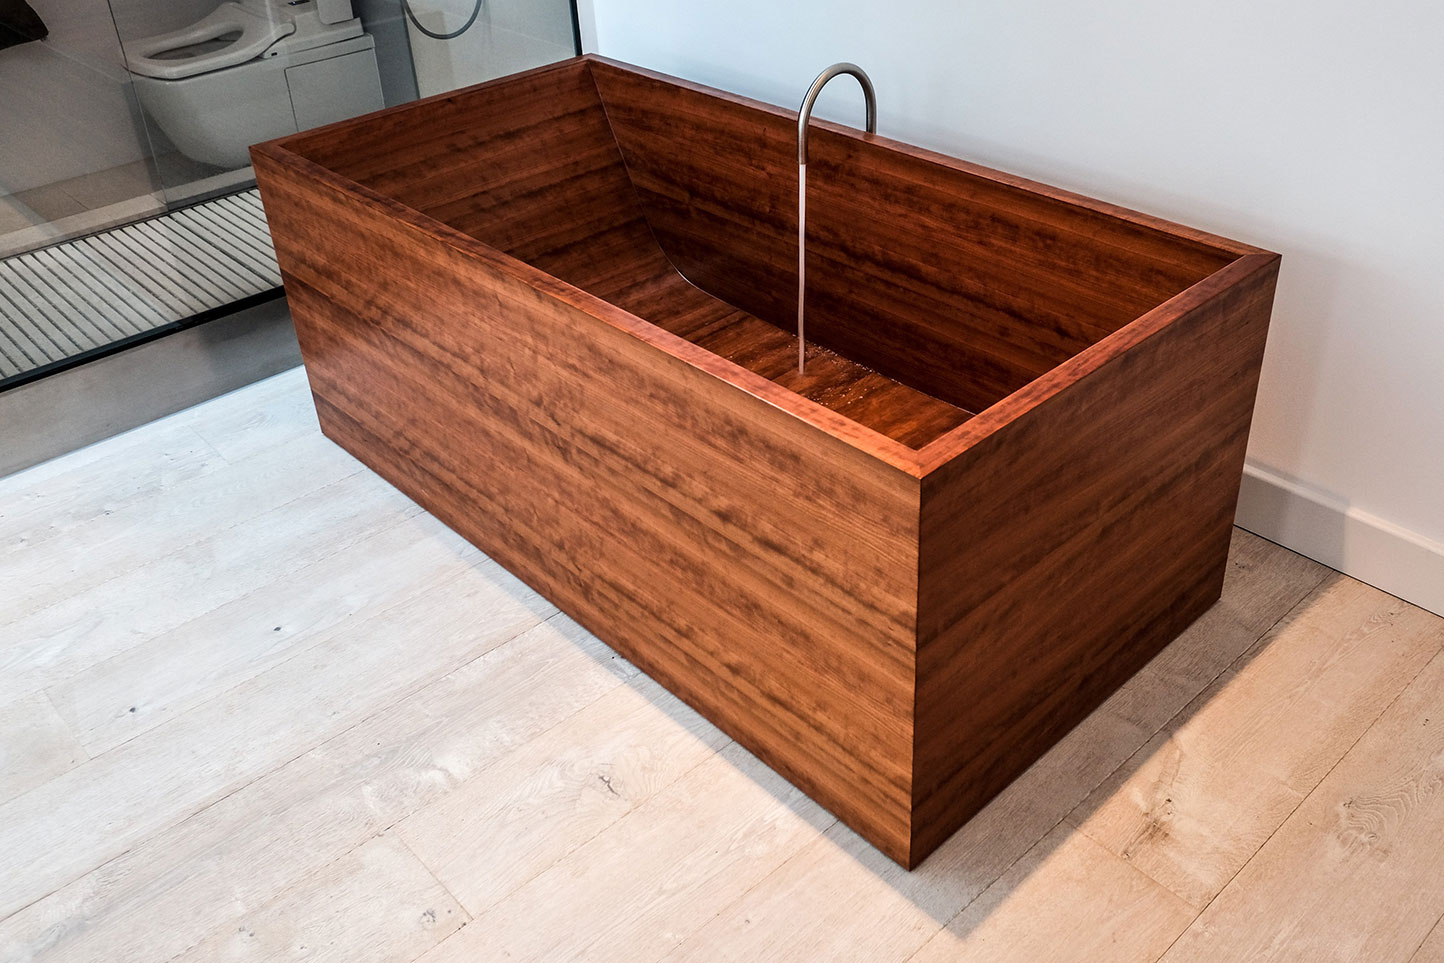 Image no. 2 of Ofuro wooden bathtub in American Cherry wood - London Cherry